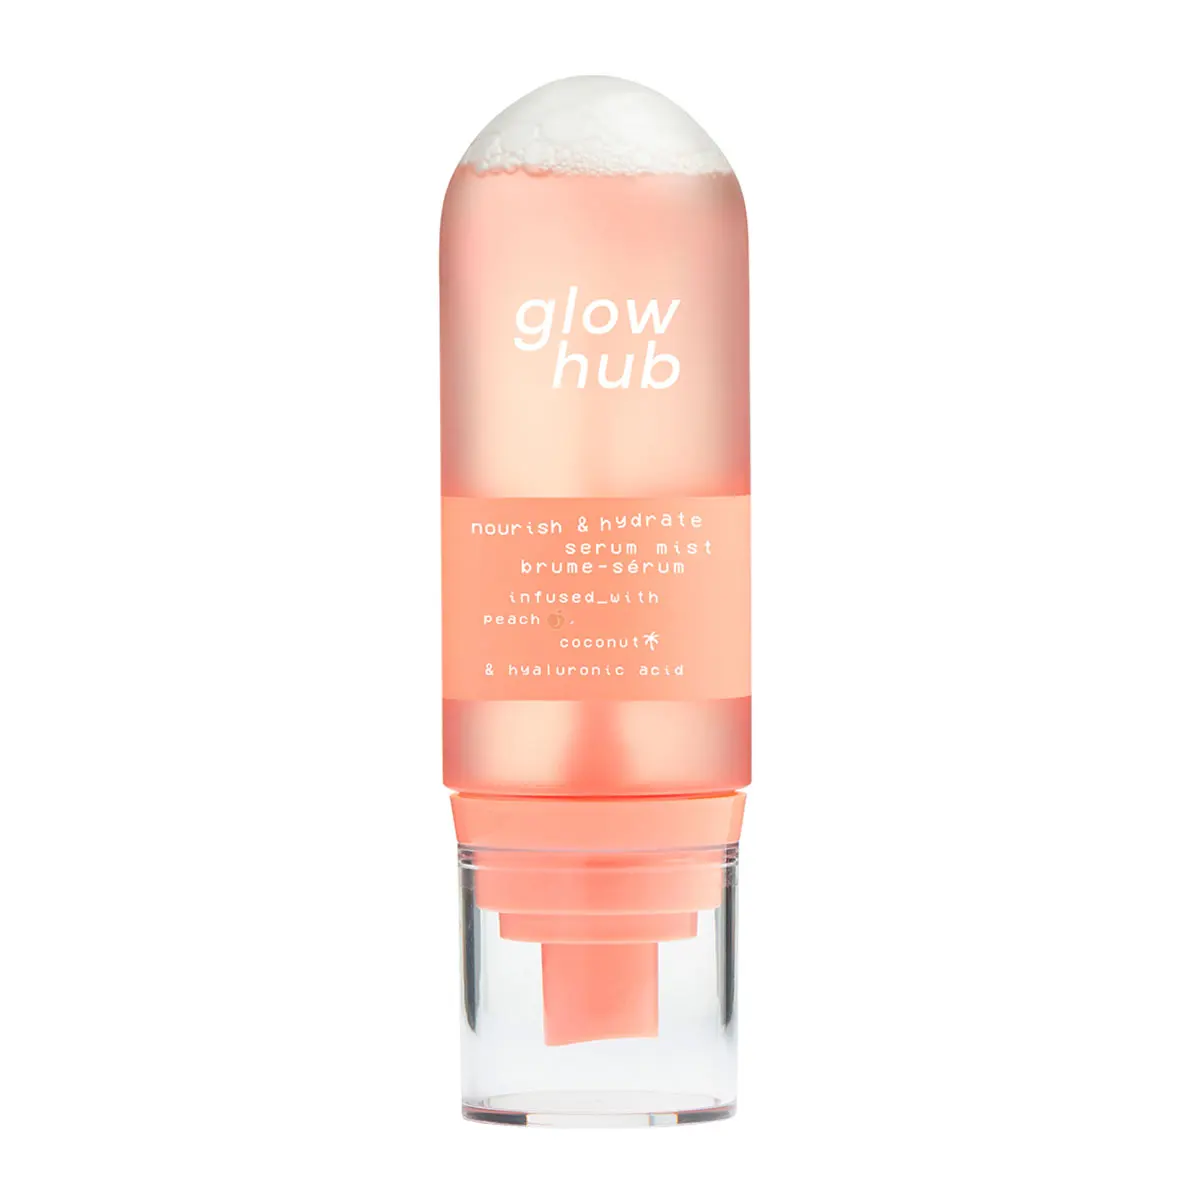 Glow Hub nourish & hydrate serum mist 90ml Discounts and Cashback